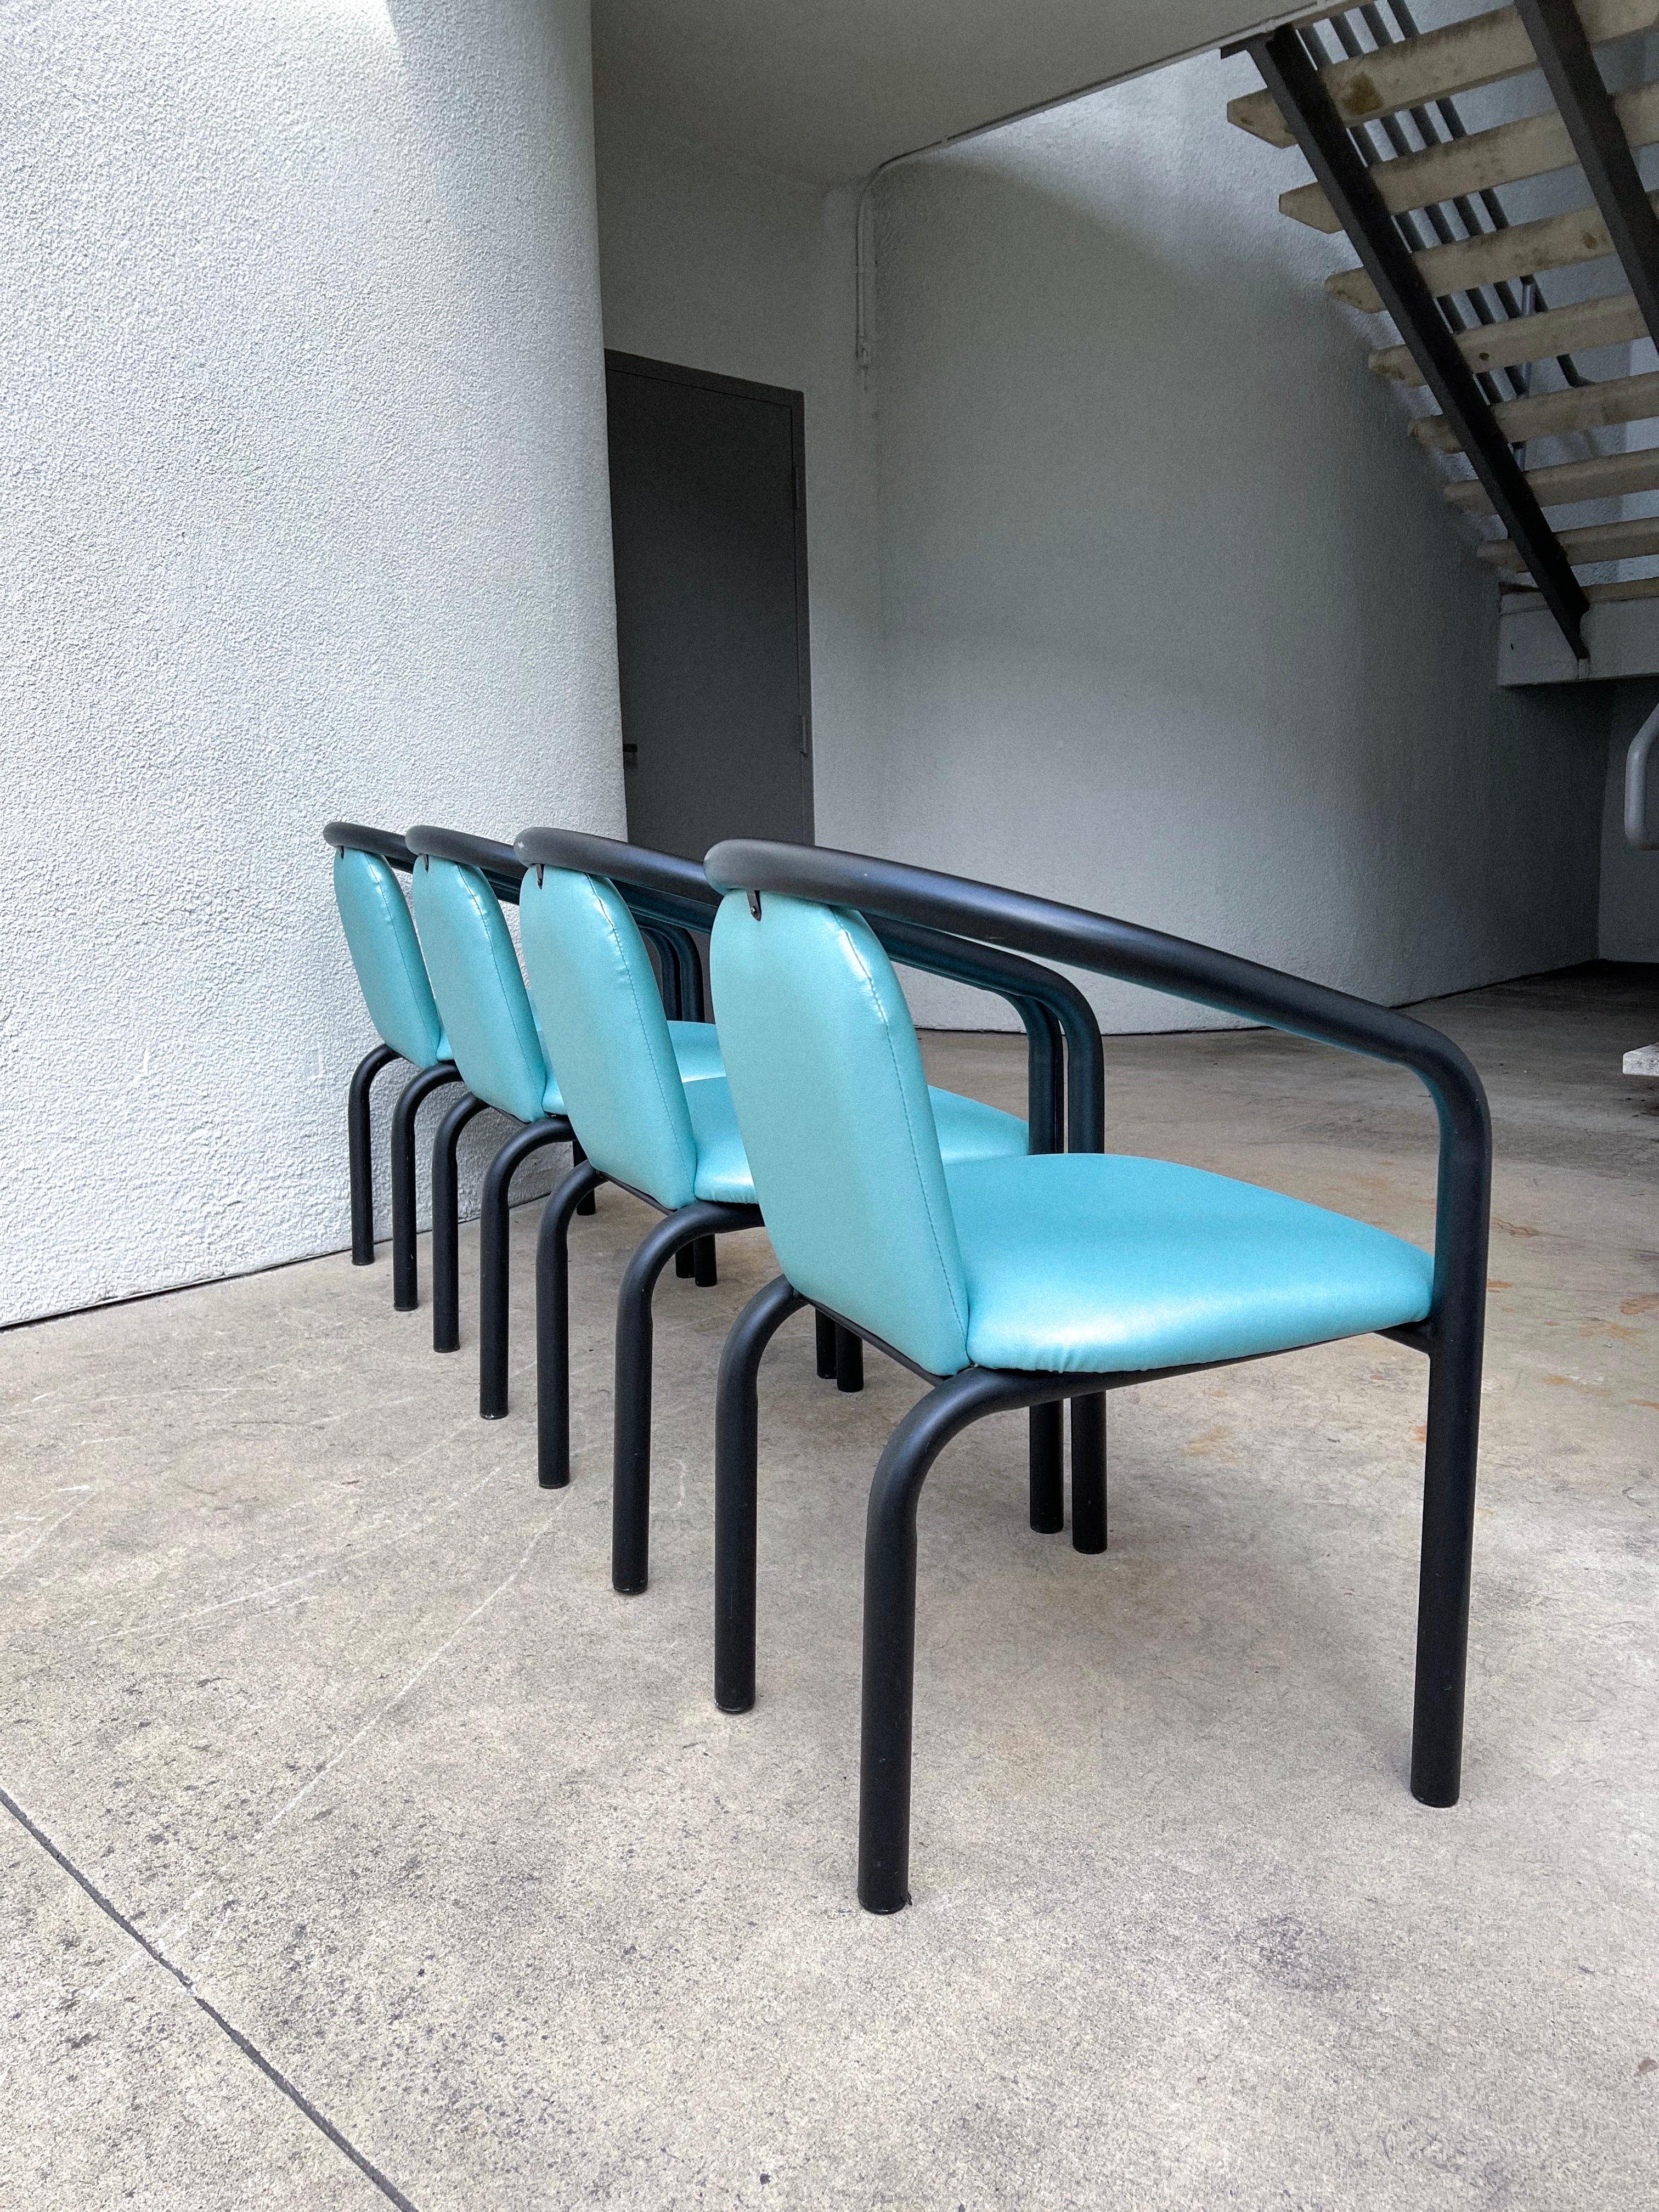 1980s Postmodern Tubular Vinyl Chairs - Set of 4 For Sale 1